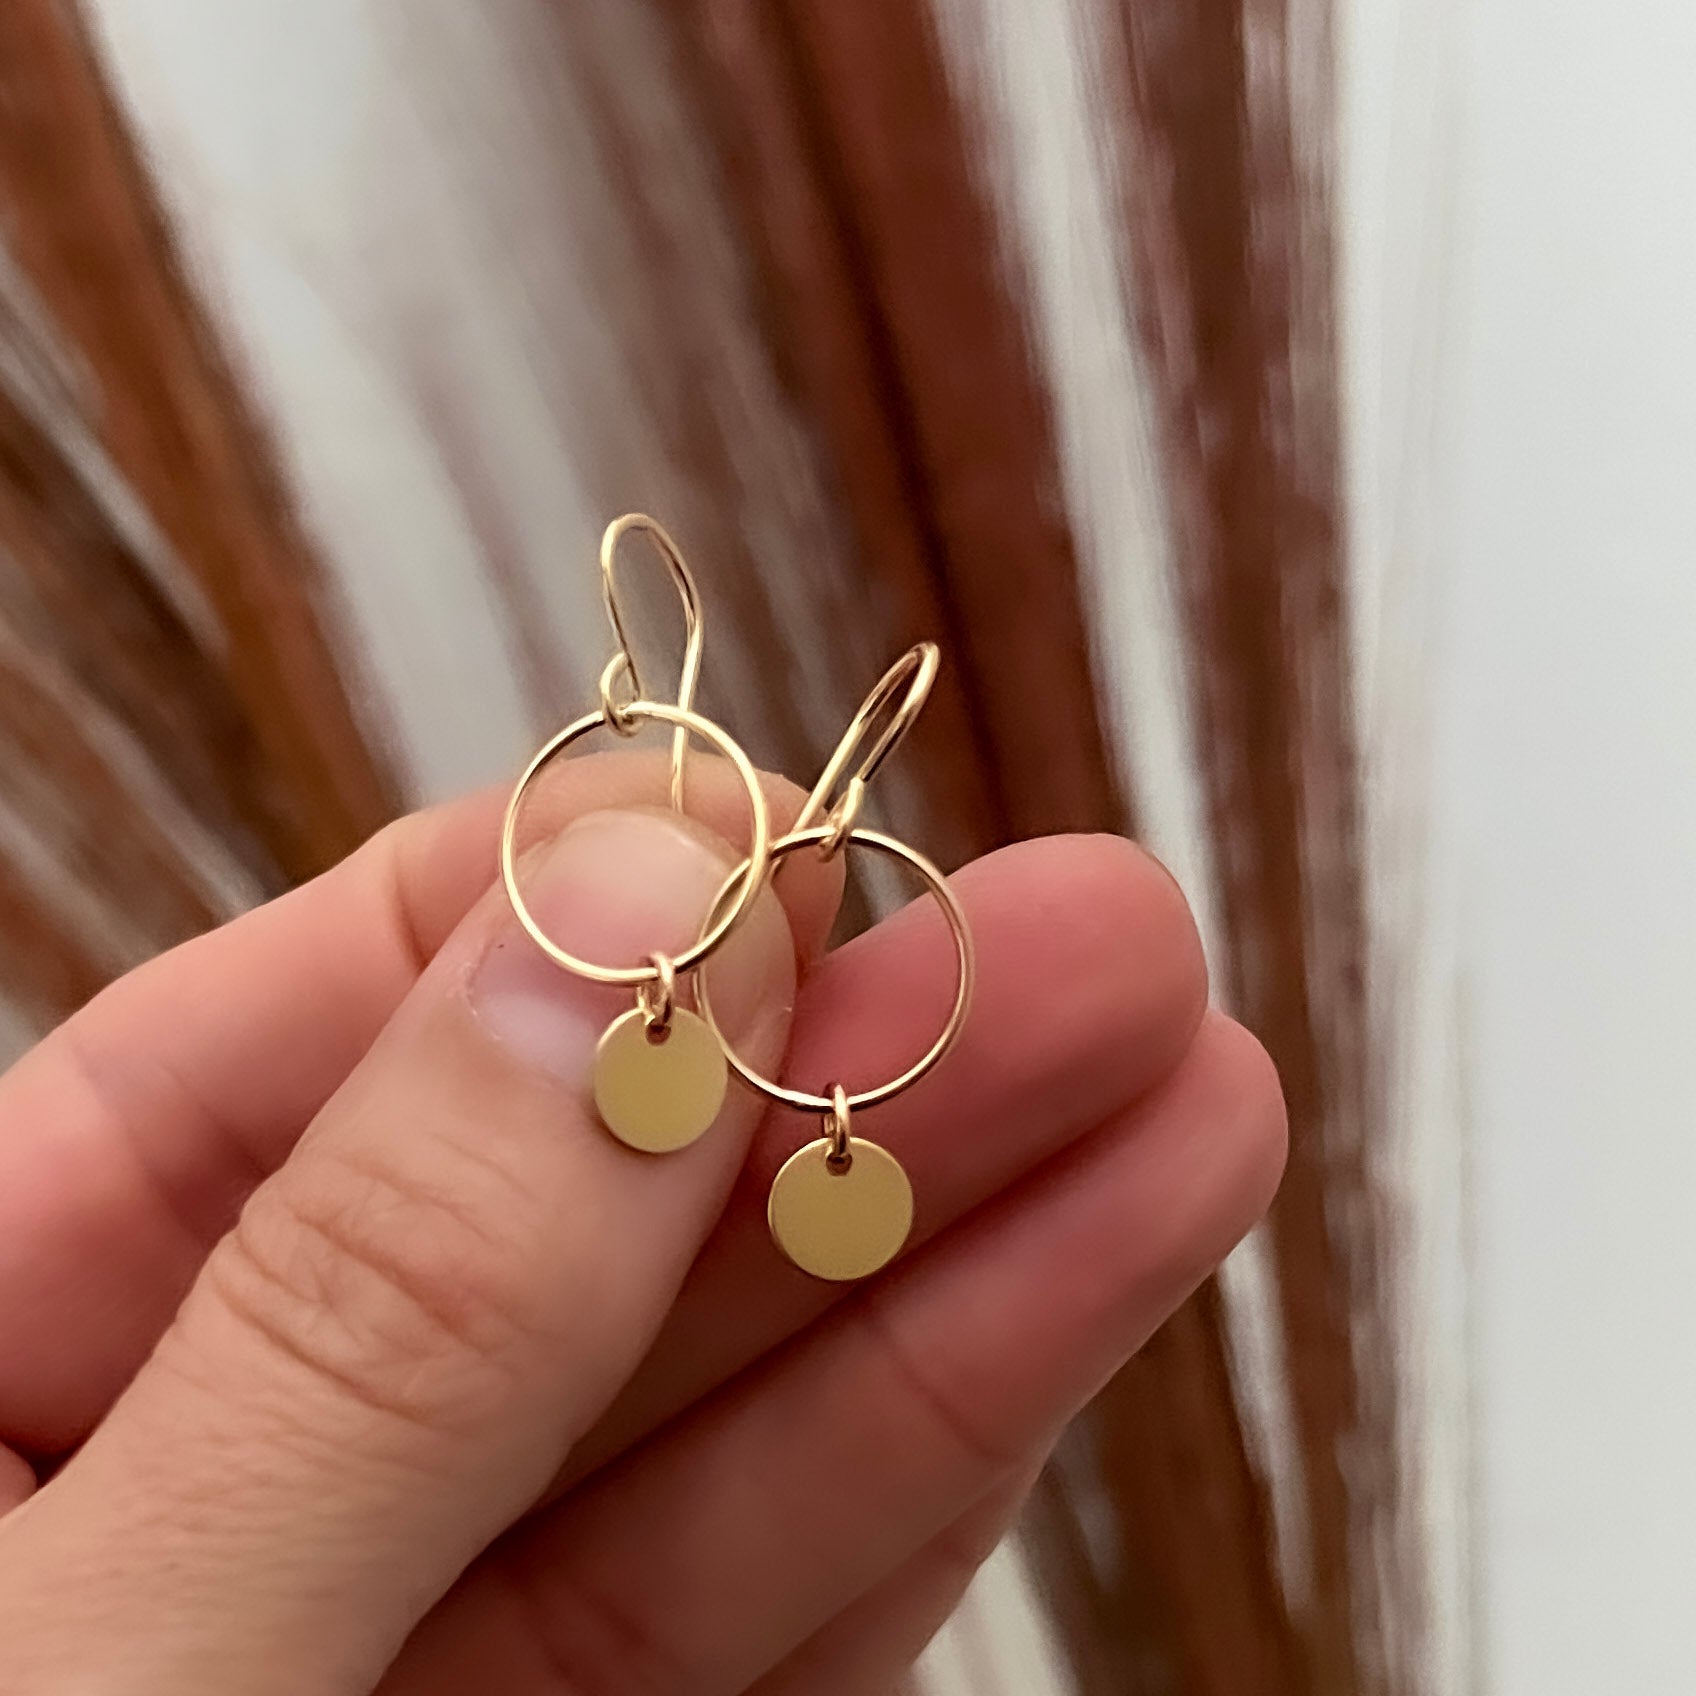 Circle & Disk Earrings - Gold Filled or Sterling Silver - Sela+Sage - Dangle Earrings